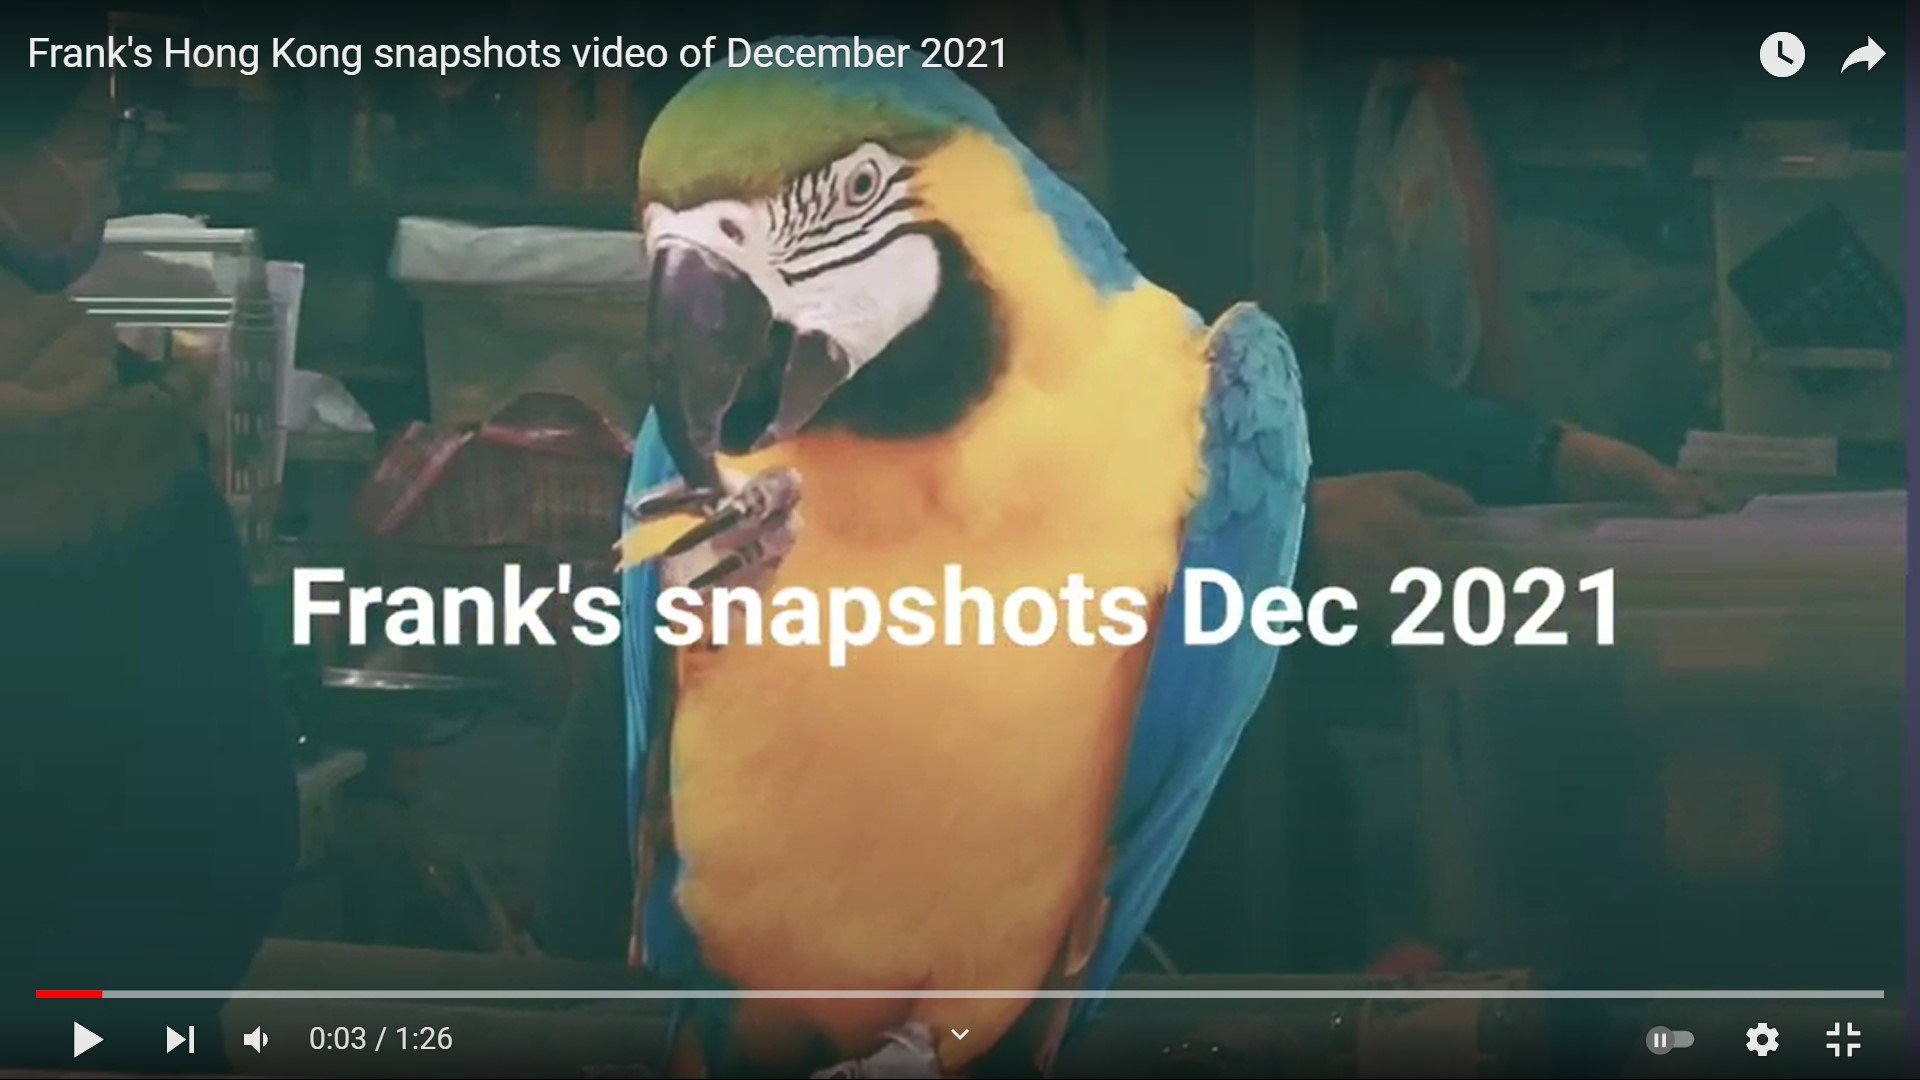 Frank’s Hong Kong snapshots video of December 2021